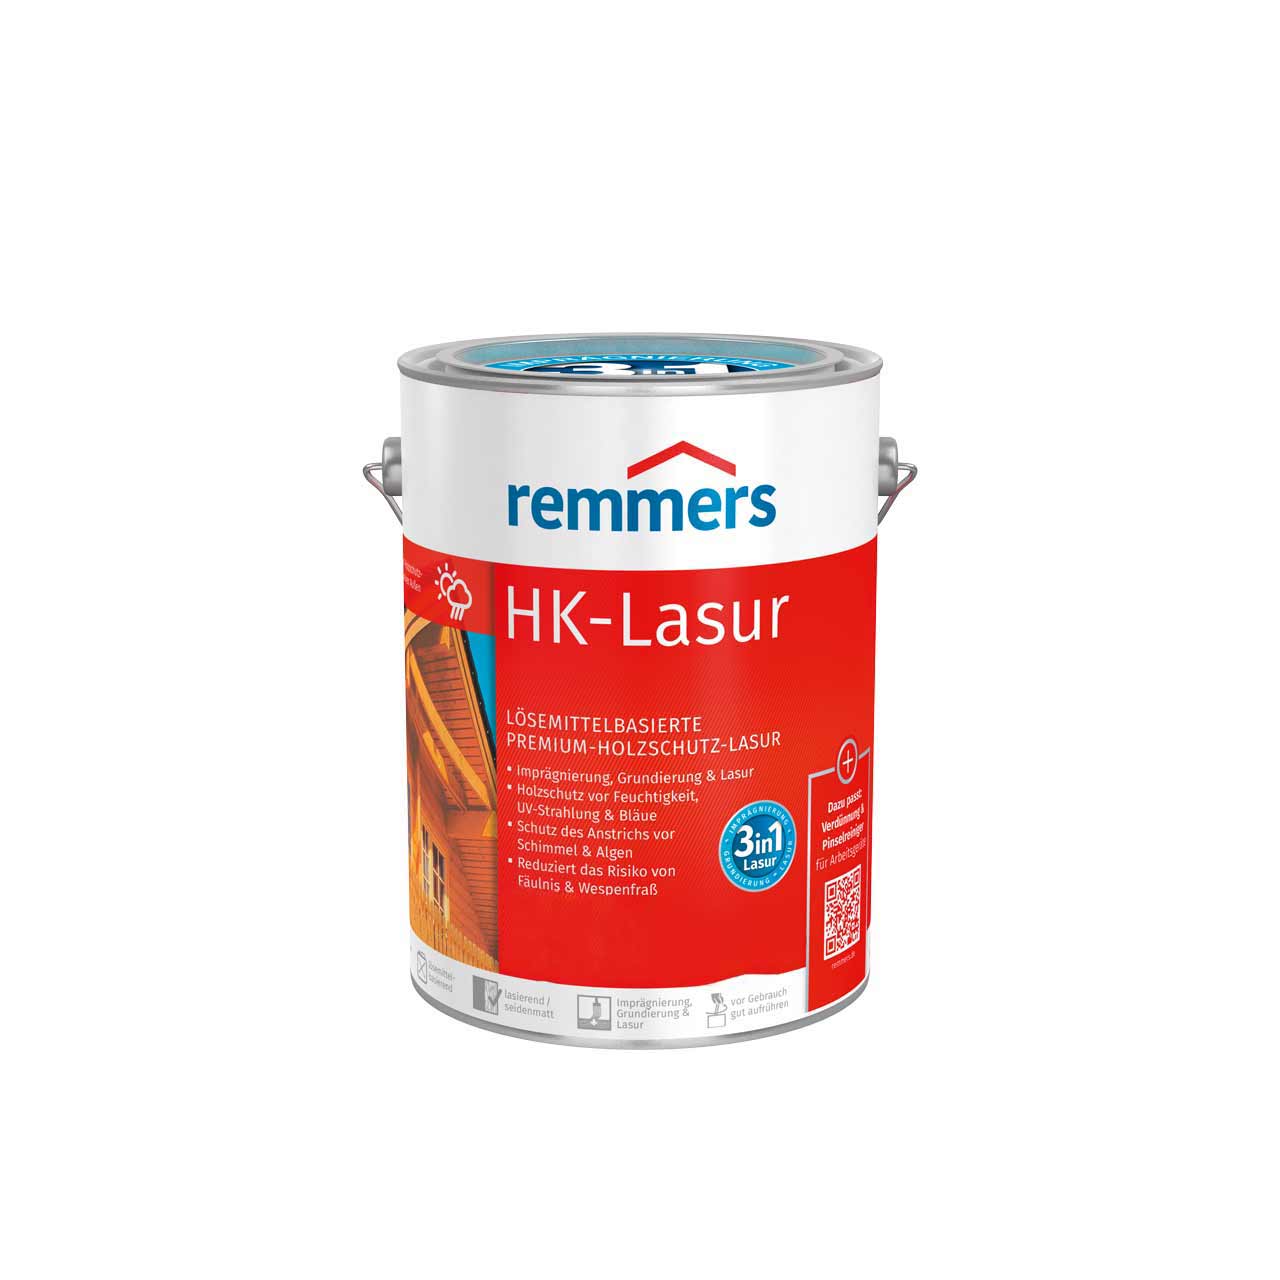 Remmers HK-Lasur Pinie/Lärche 5,0 Liter